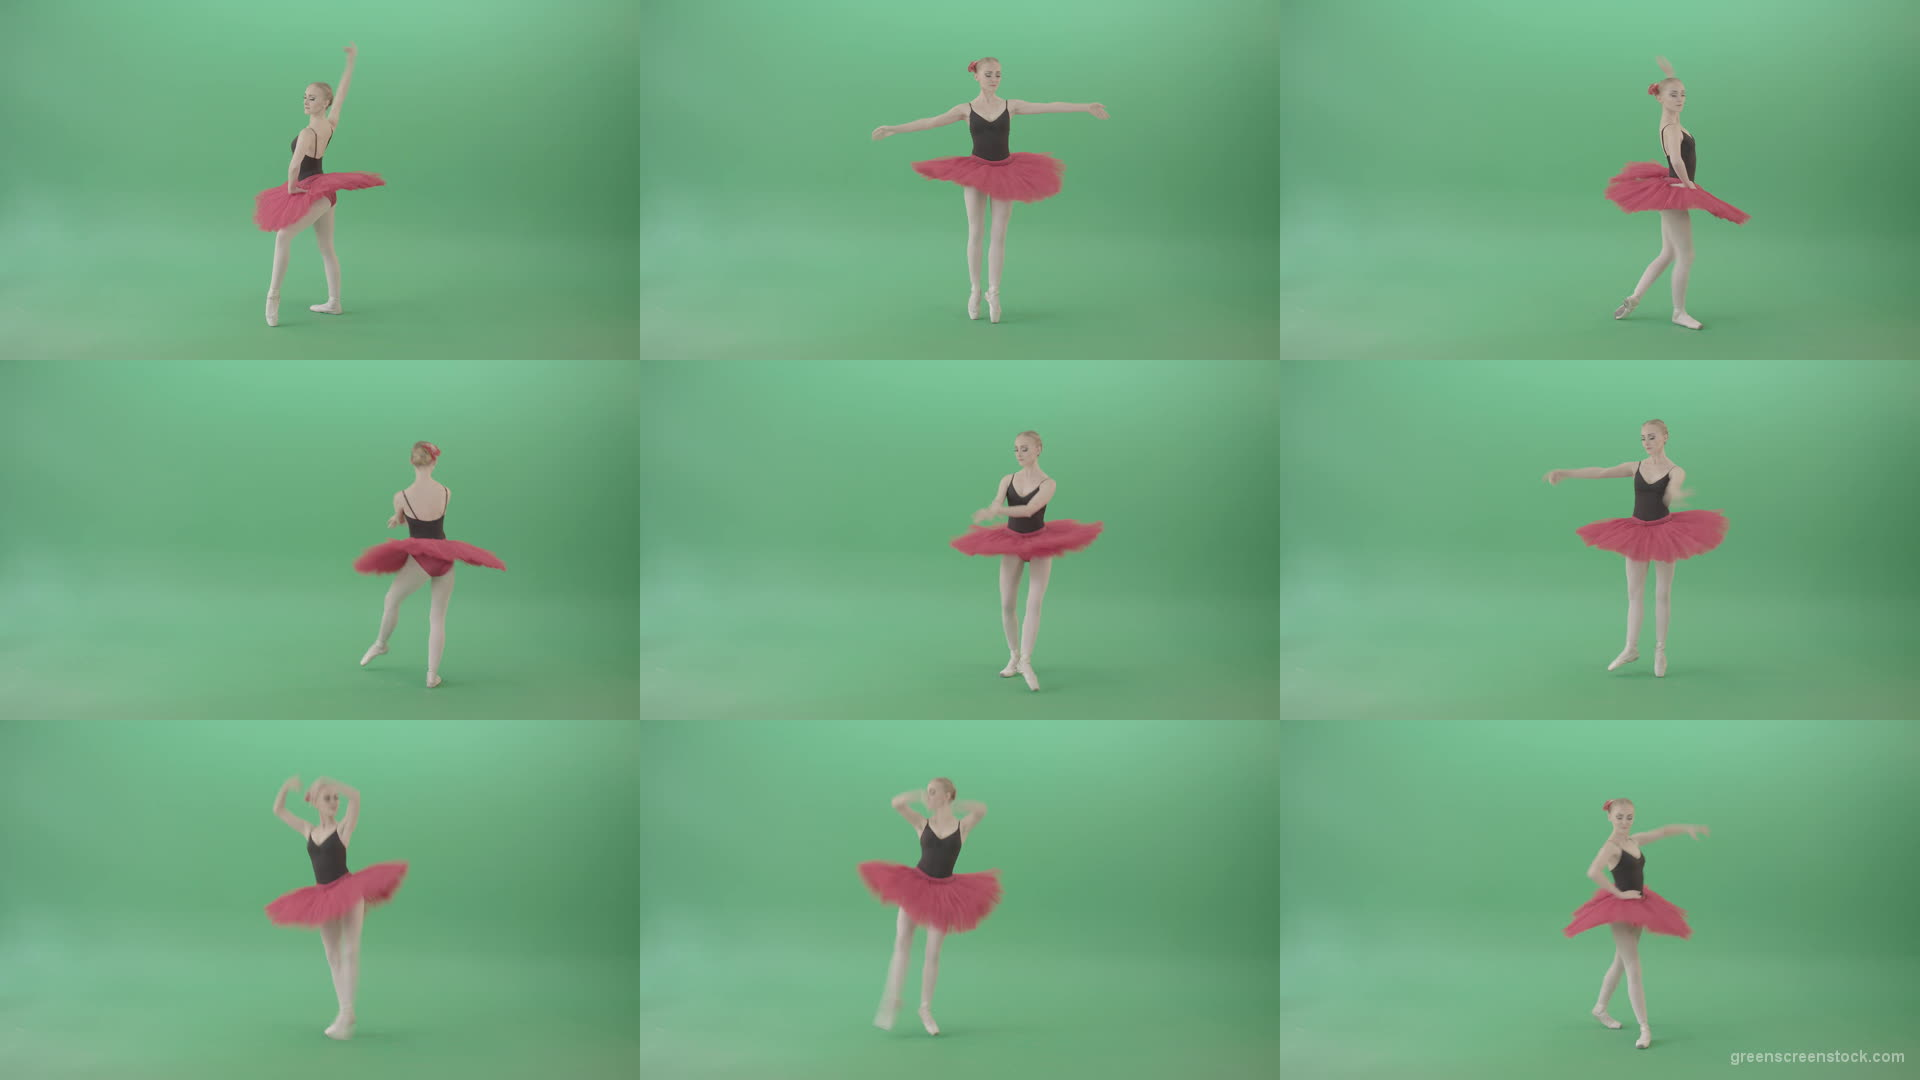 Classical-Ballerina-girl-dancing-red-black-ballet-on-green-screen-4K-Video-Footage-1920 Green Screen Stock